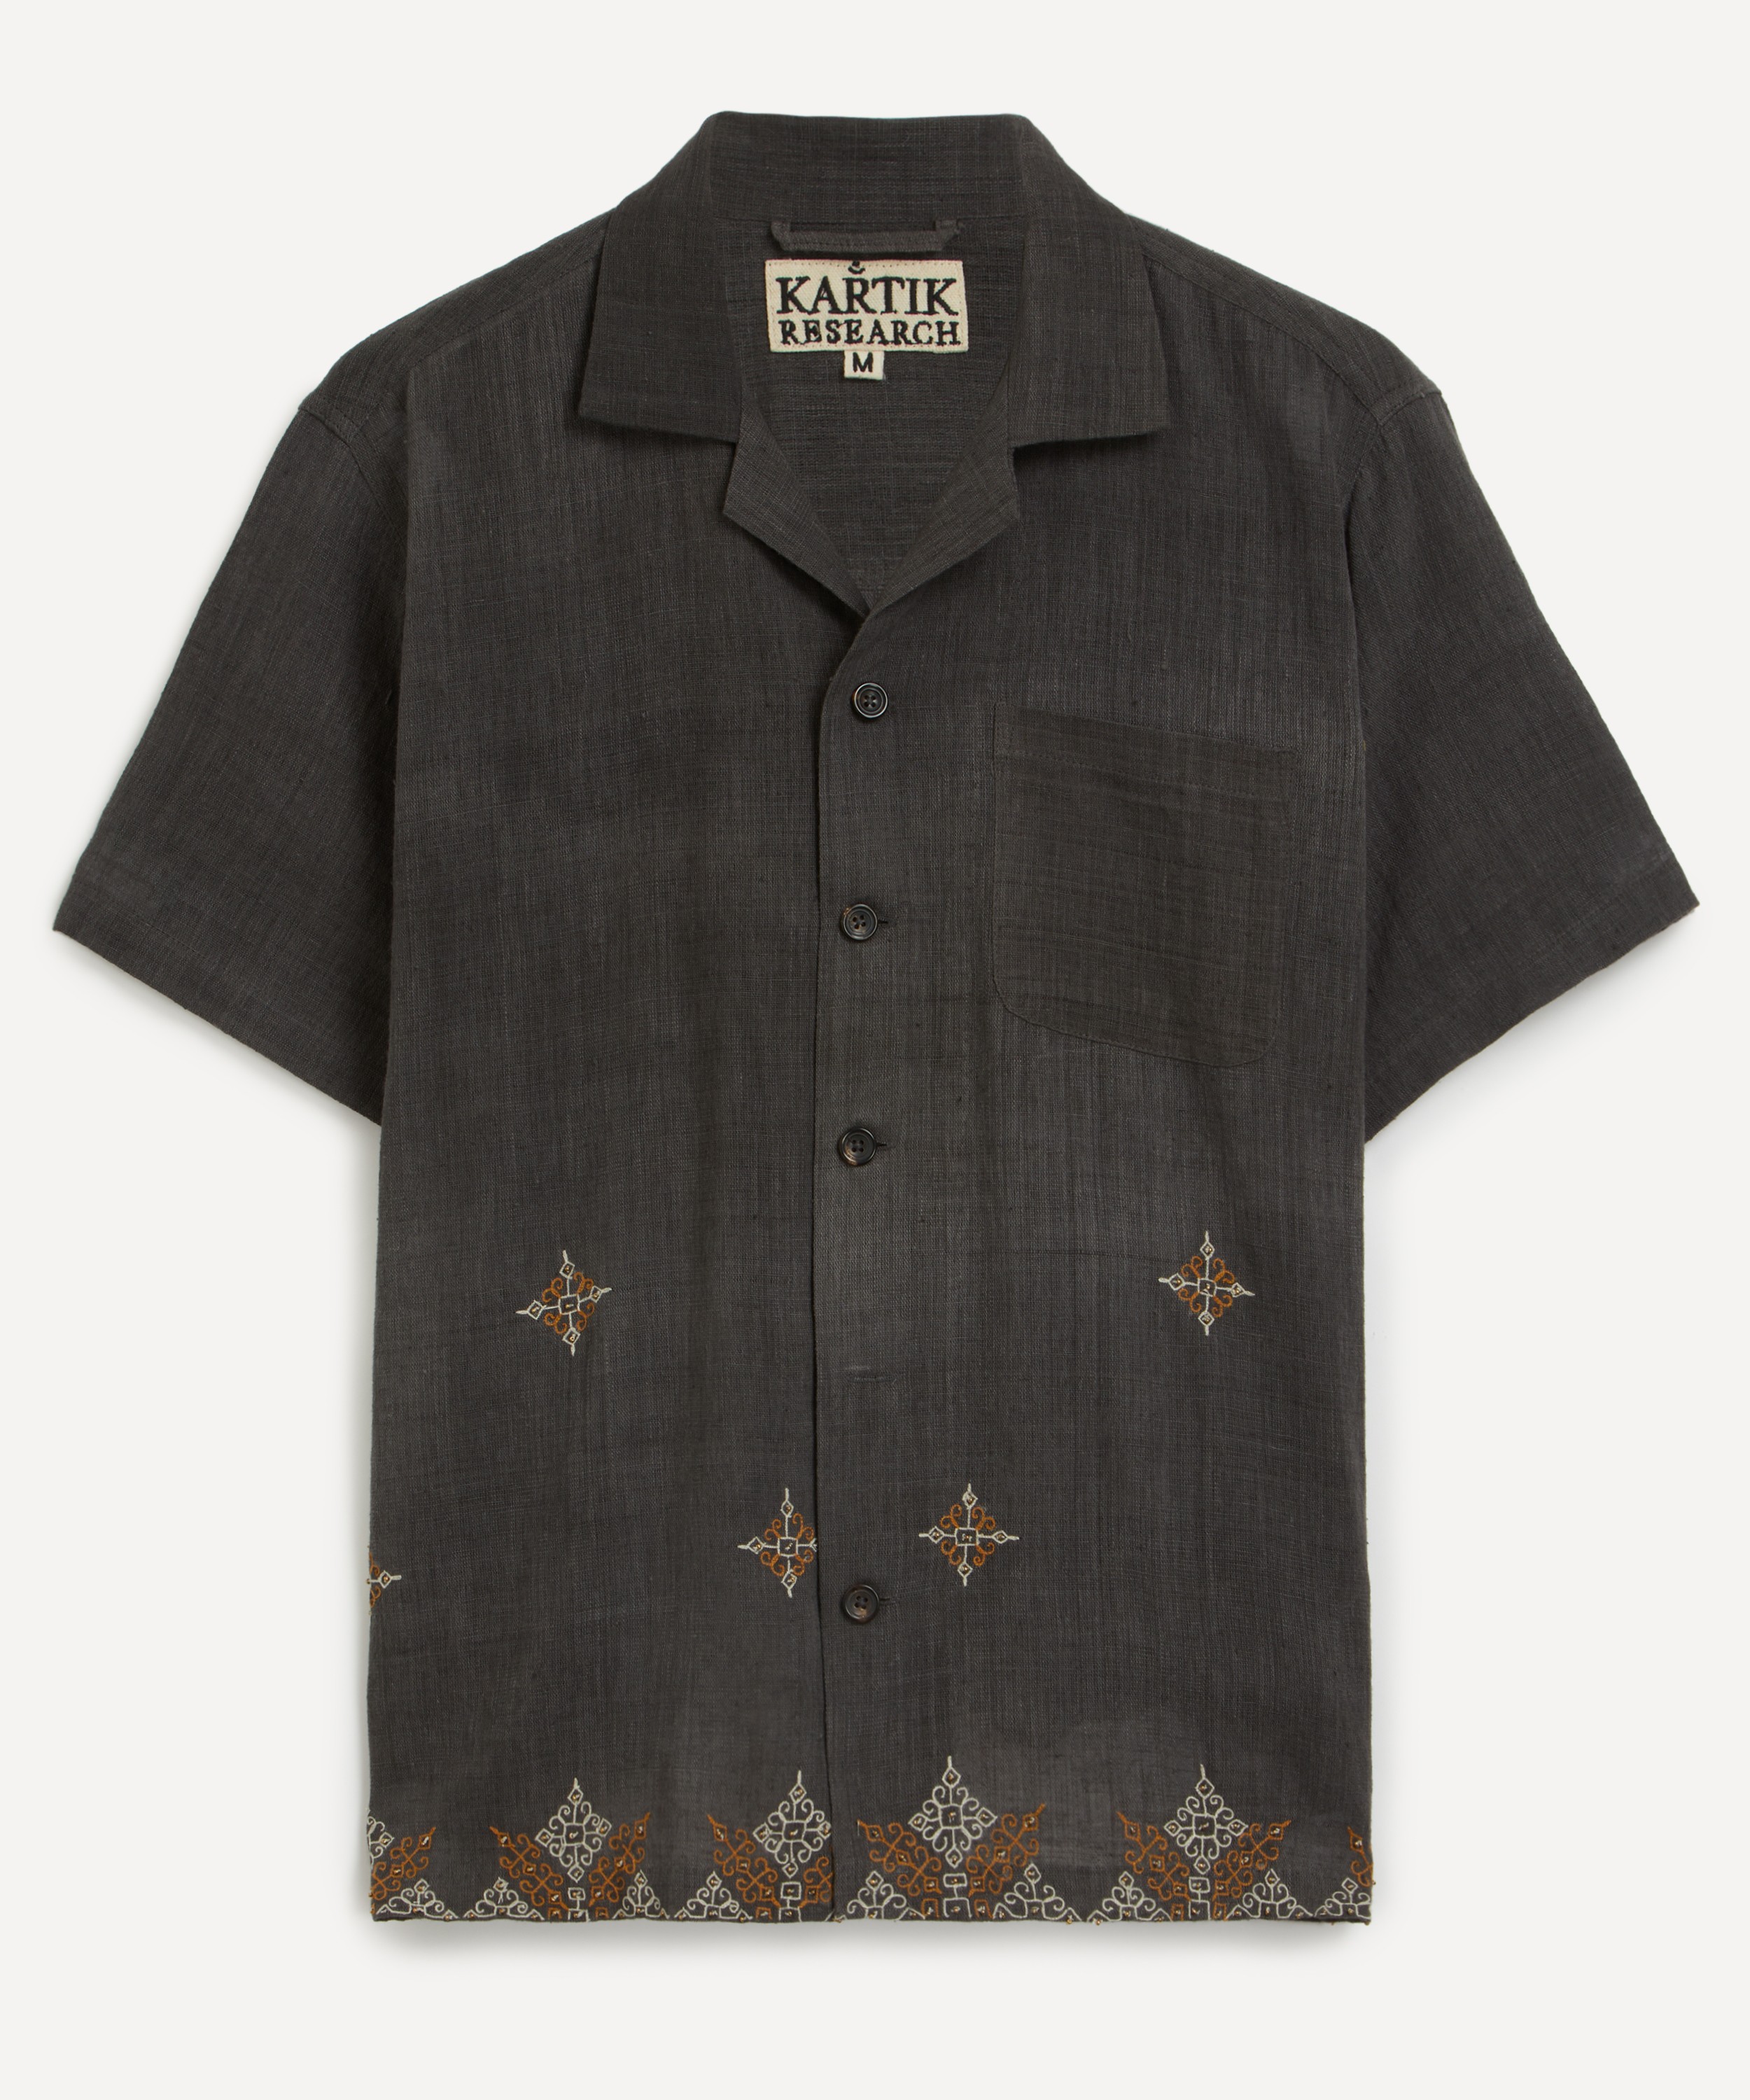 Kartik Research - Kasuti Handwoven Embroidered Cotton Shirt